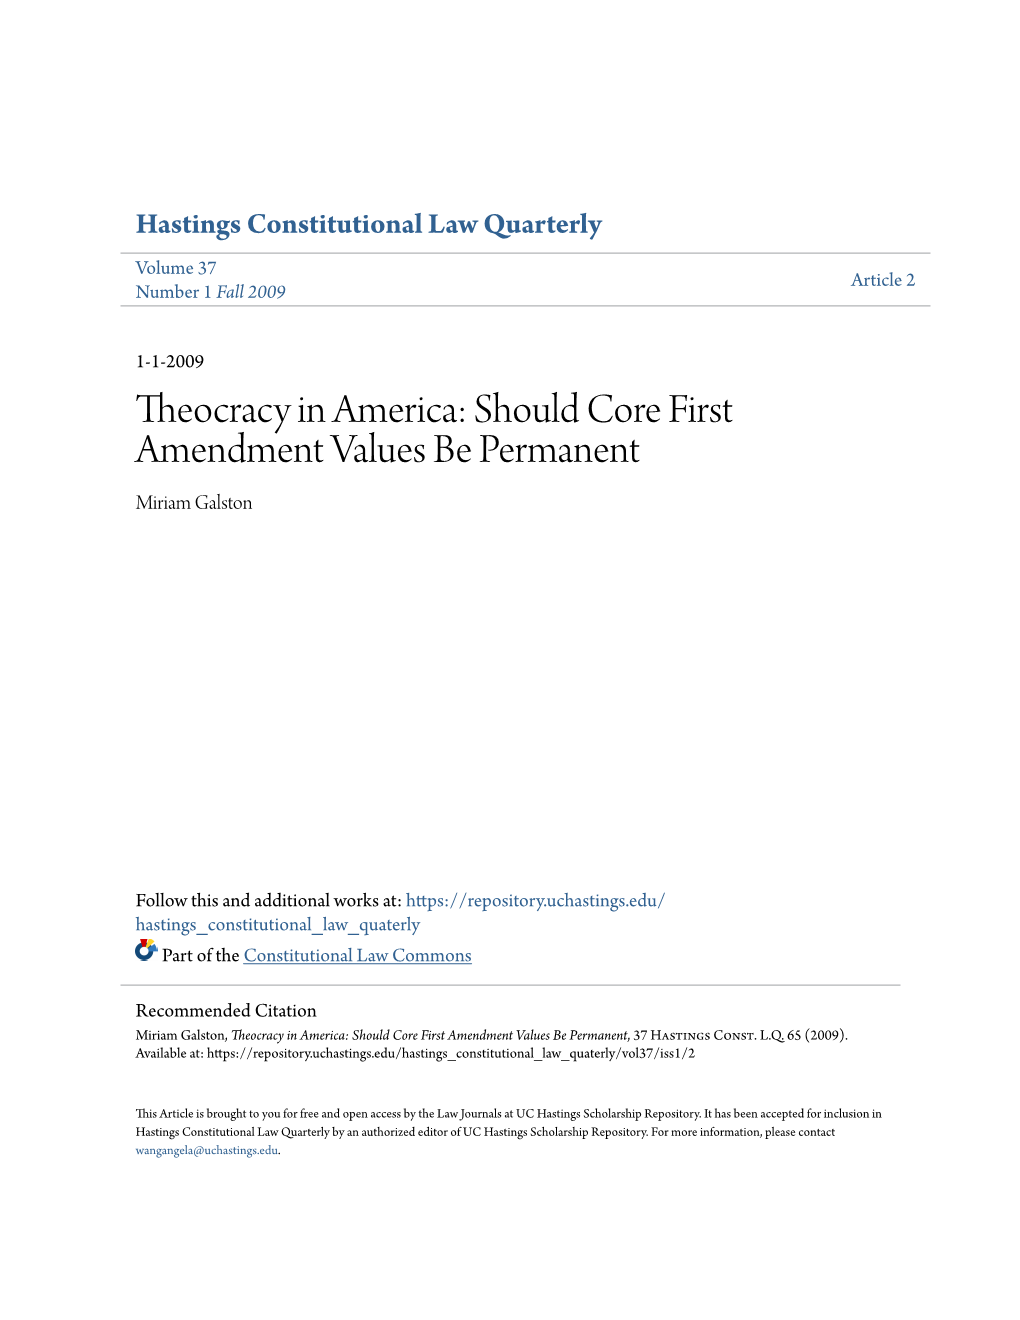 Theocracy in America: Should Core First Amendment Values Be Permanent Miriam Galston